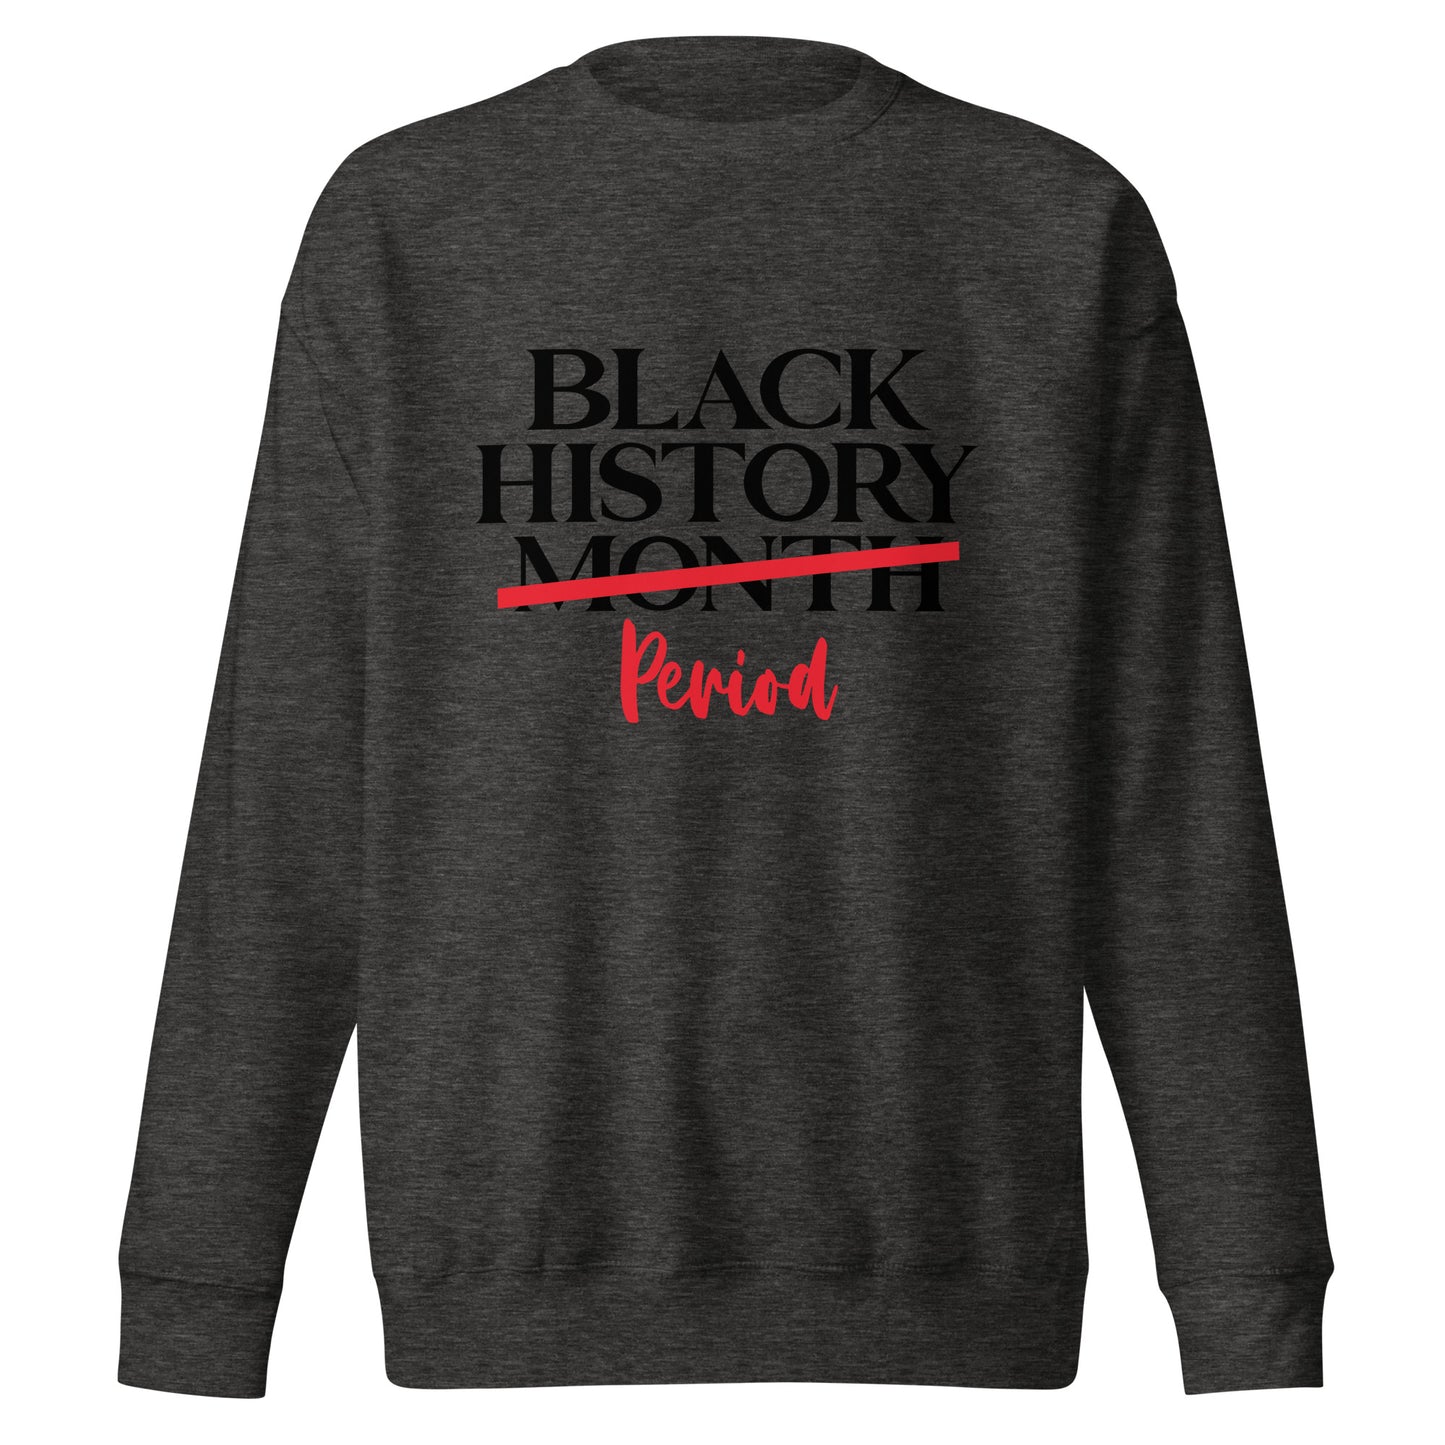 Black History Month Period Unisex Premium Sweatshirt